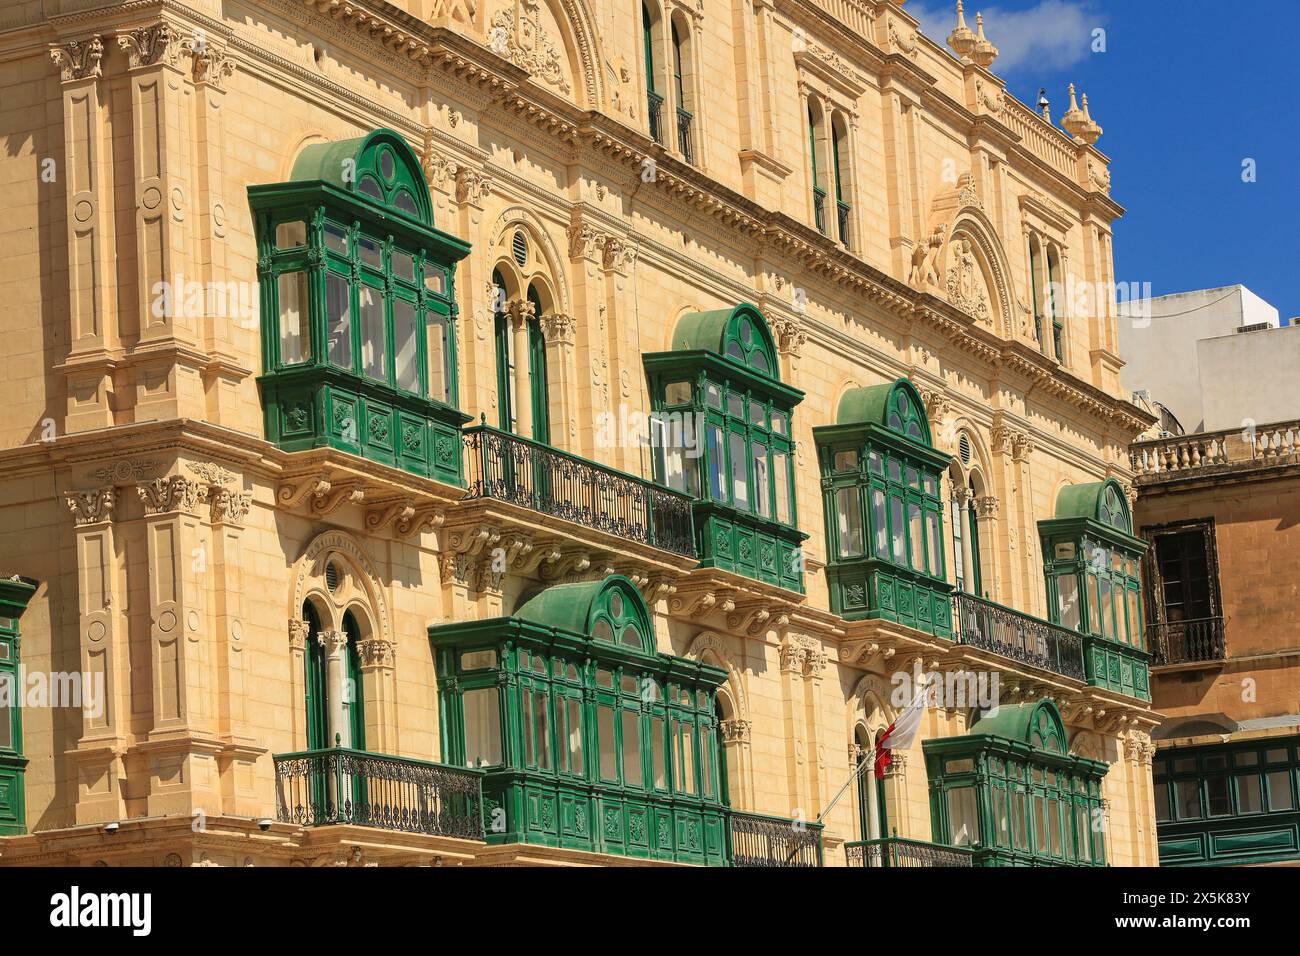 Valletta, Malta. Ornate green balconies, gothic arched windows and Corinthian columns on a baroque limestone building Stock Photo